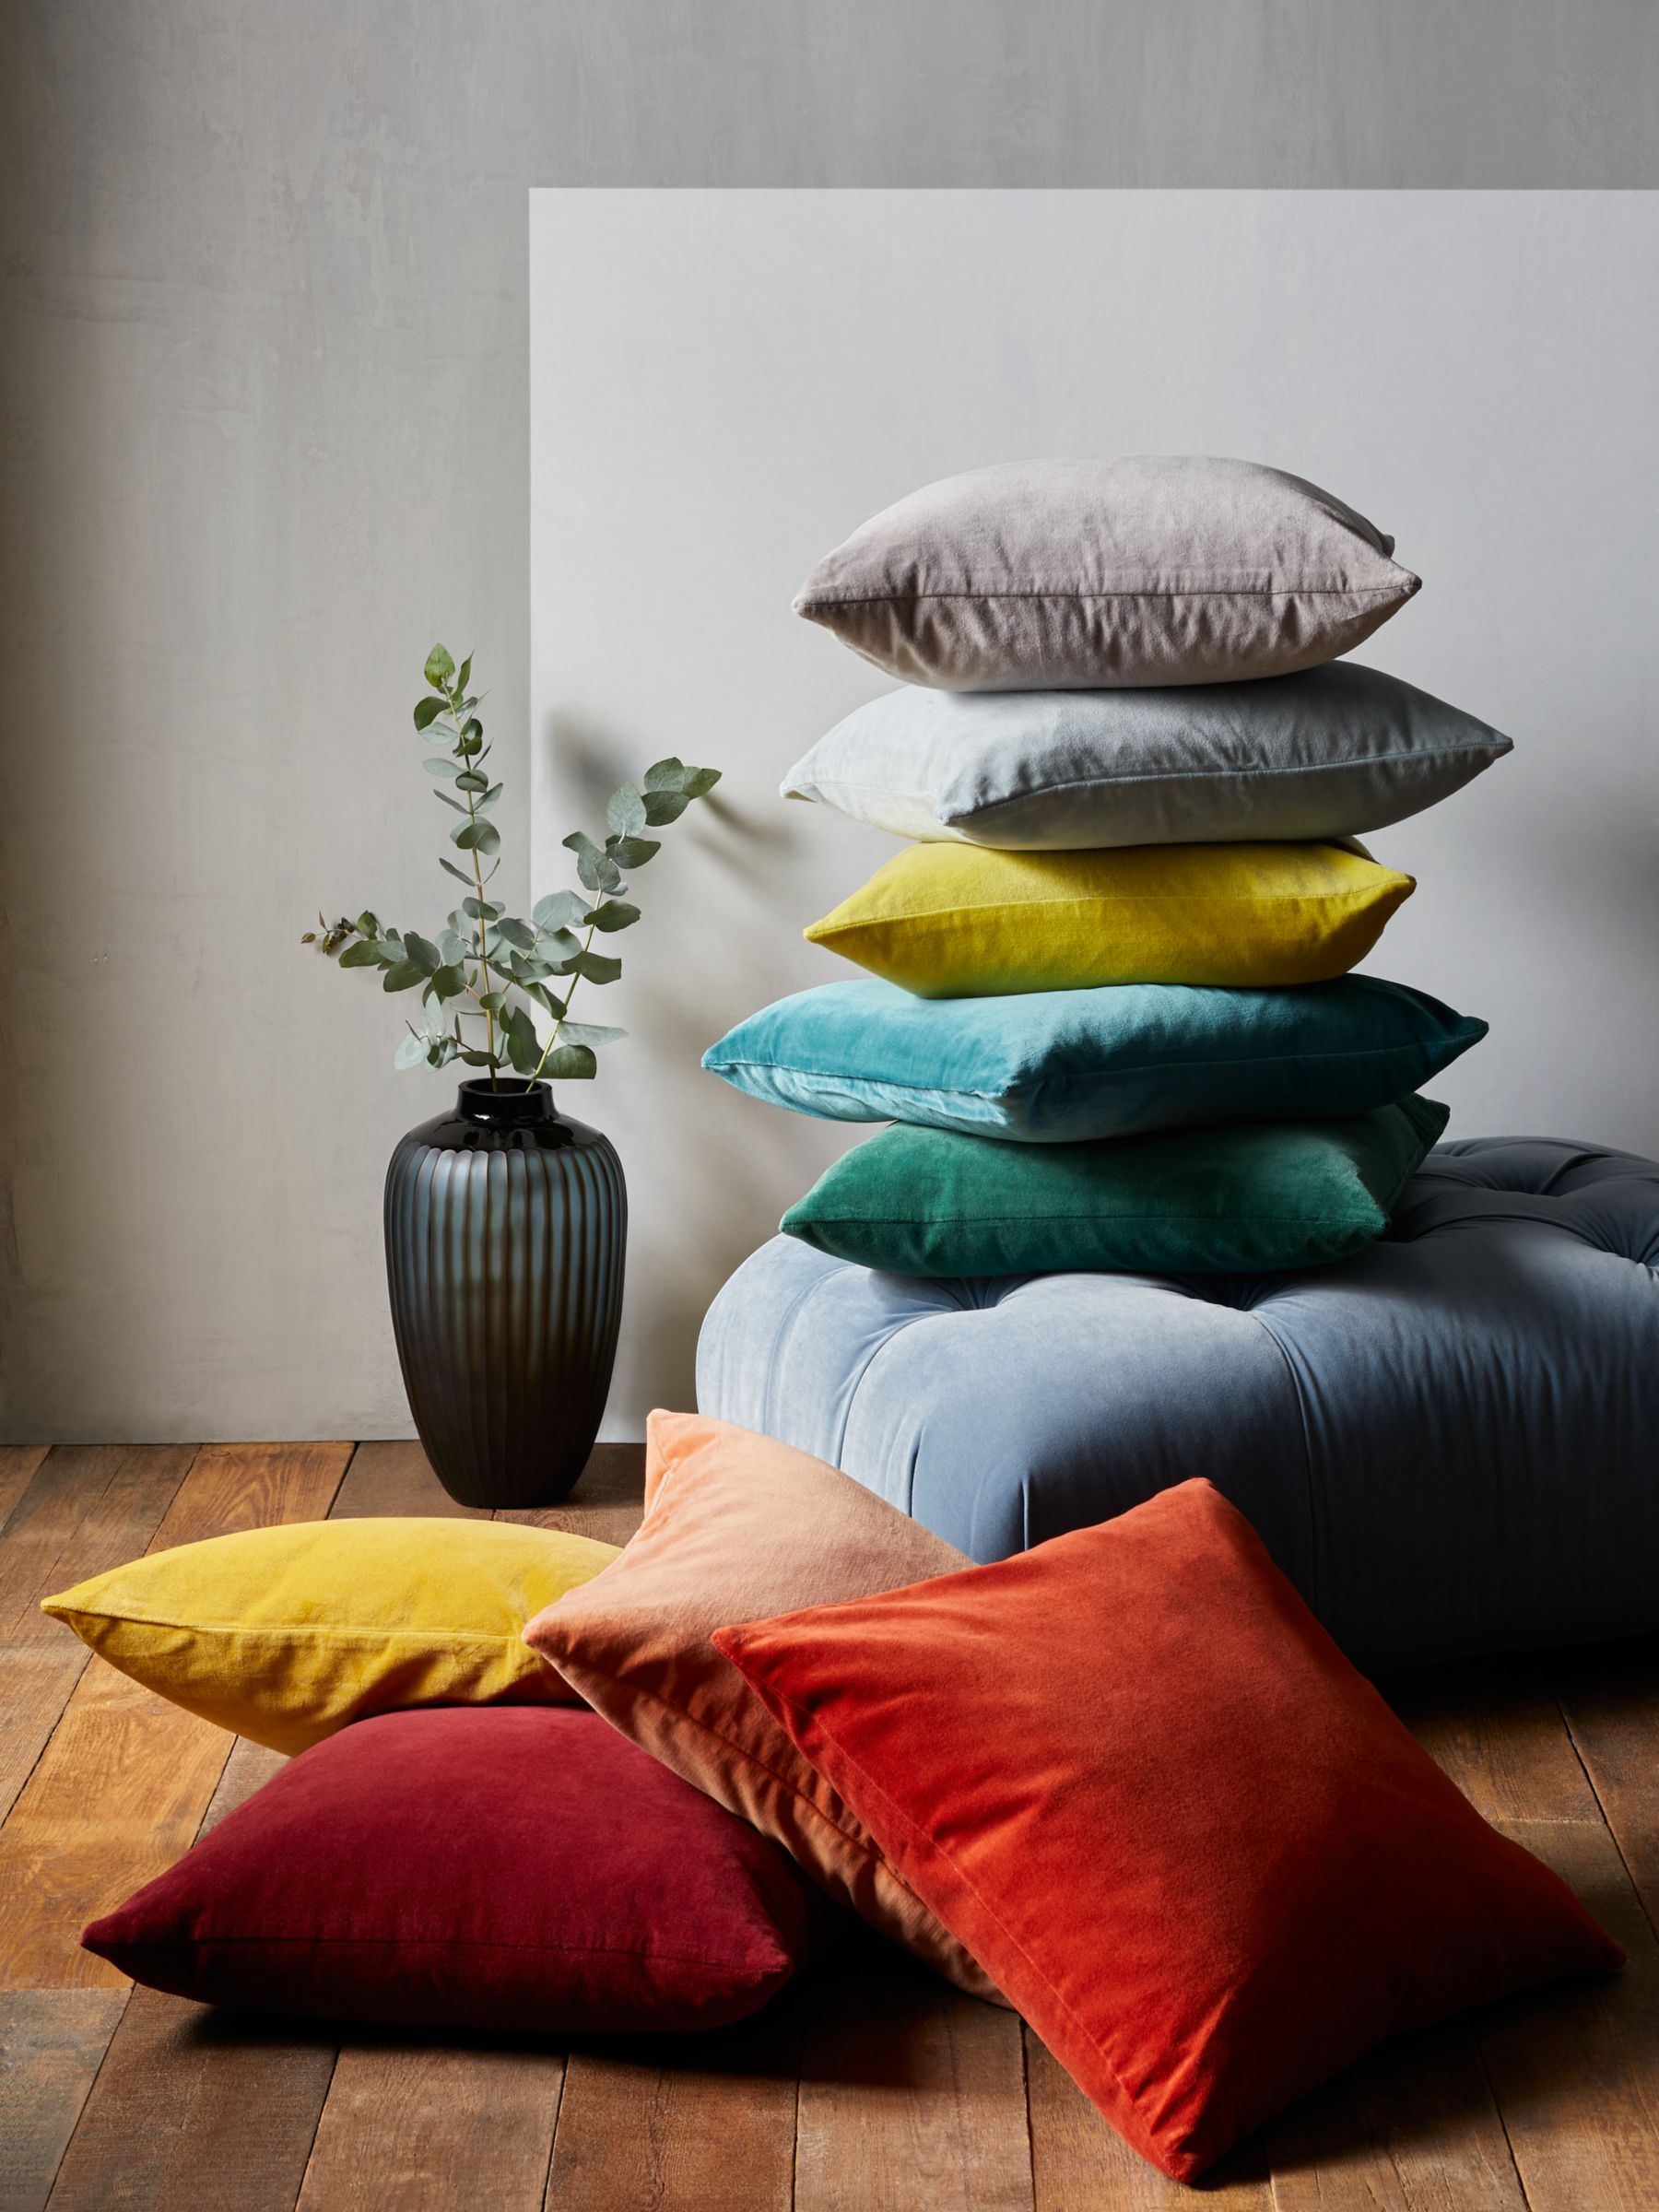 Throw Pillows - Shop Cushions and Toss Pillows at Fig Linens and Home Page  24 - FIG LINENS AND HOME